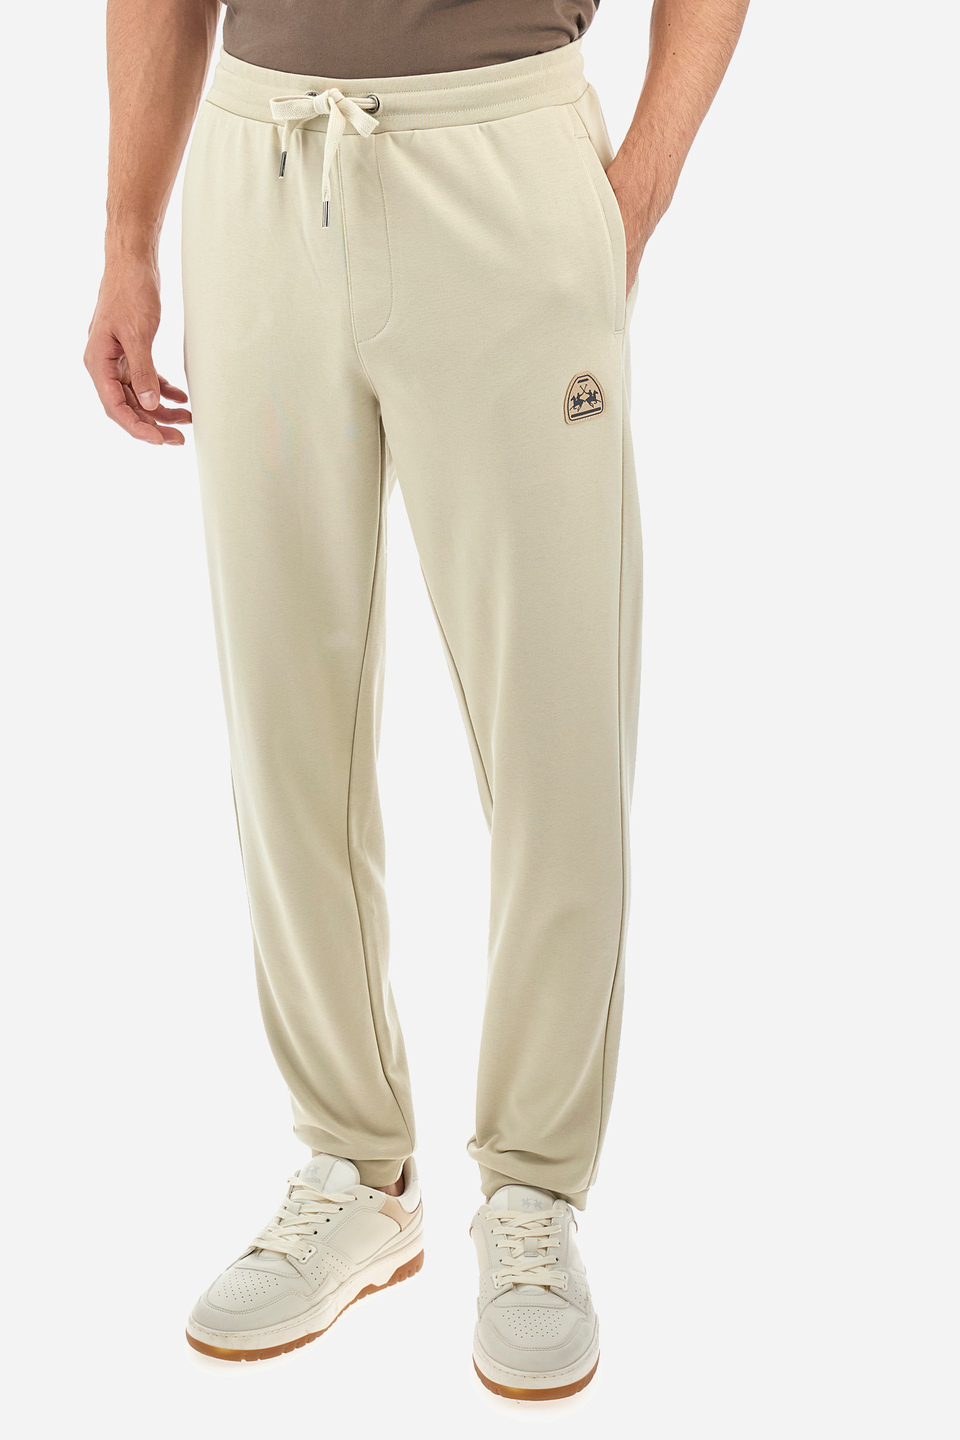 Buy RNS Premium White Cricket Trousers Online - Sportskhel.com